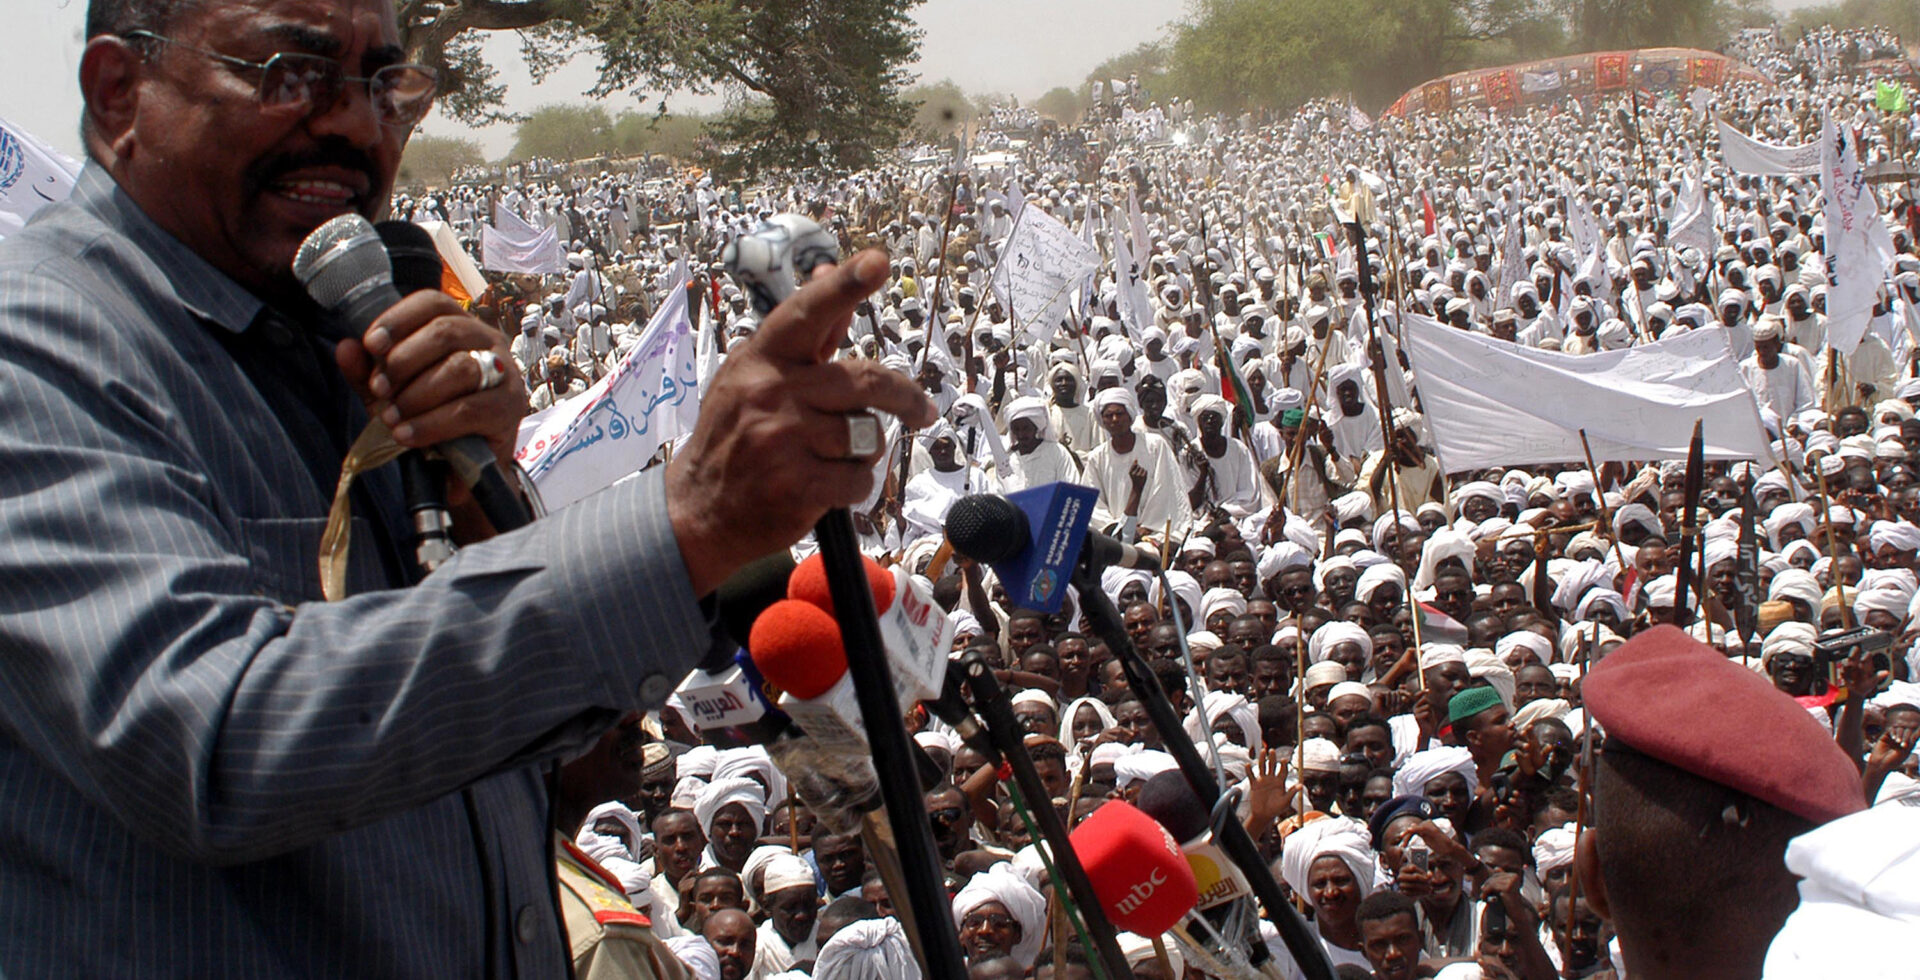 Sudan's President Bashir addresses hundreds of his supporters